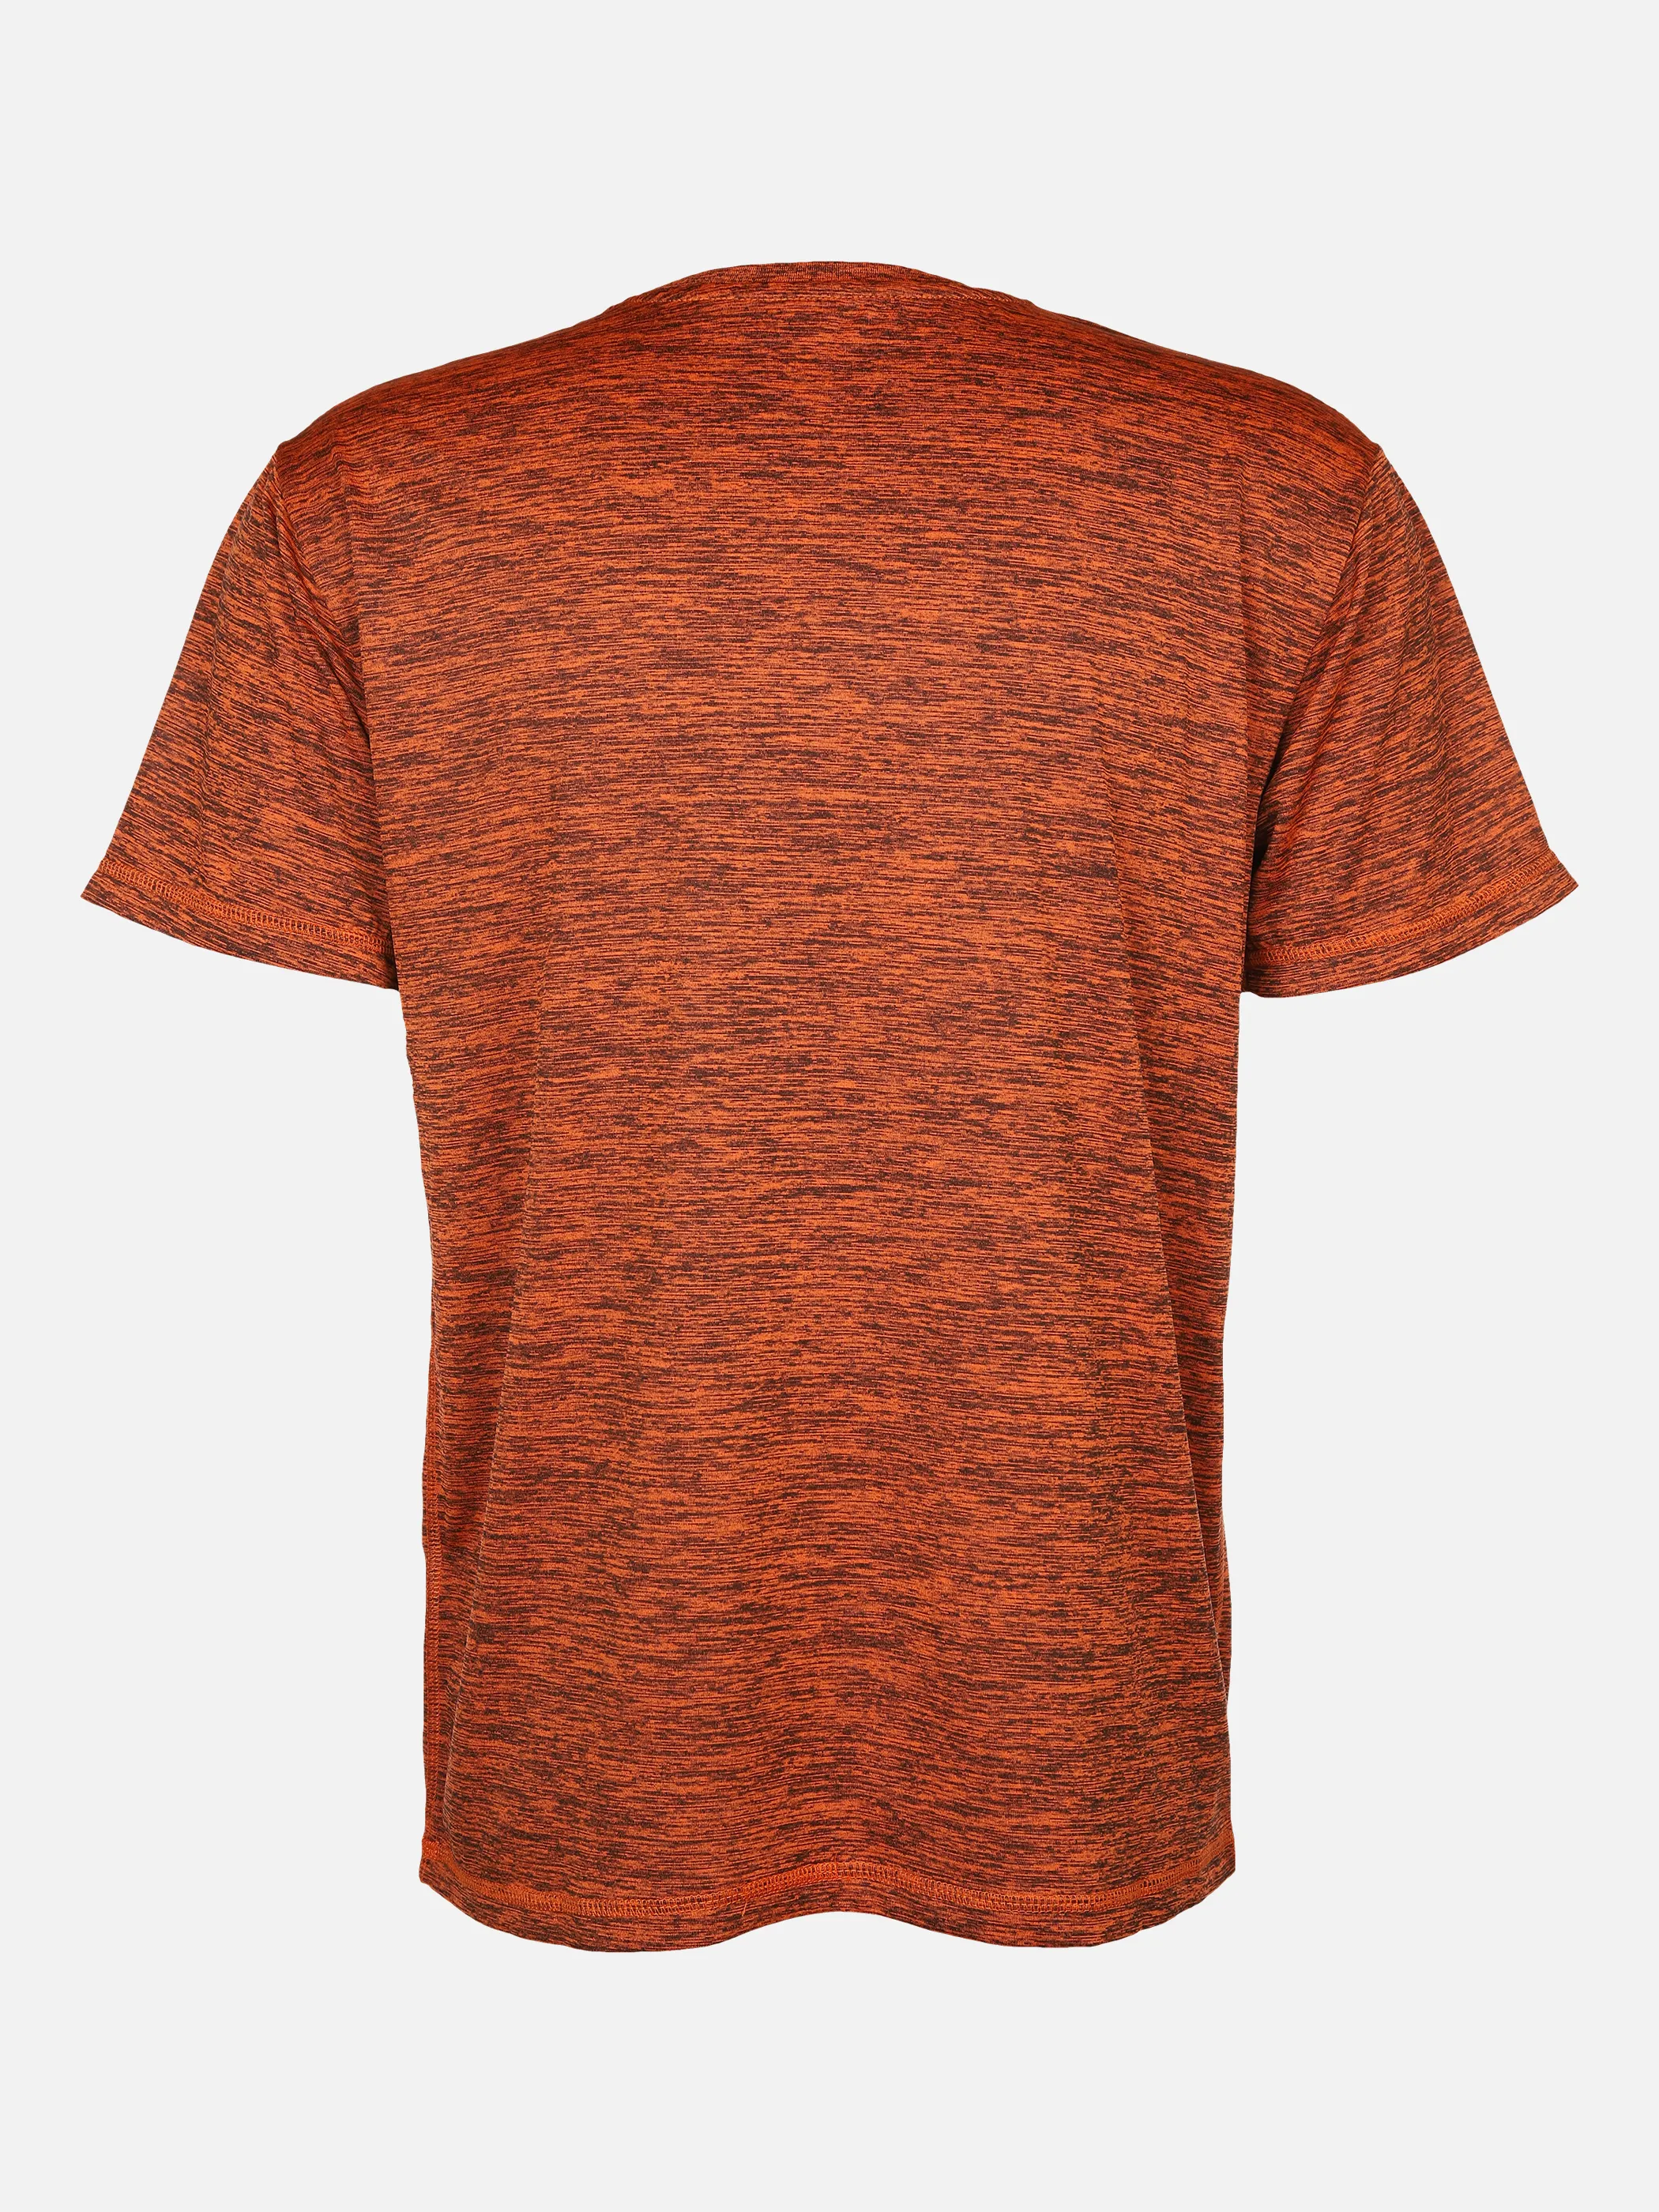 Grinario Sports He-Sport-T-Shirt Orange 873750 ORANGE MEL 2